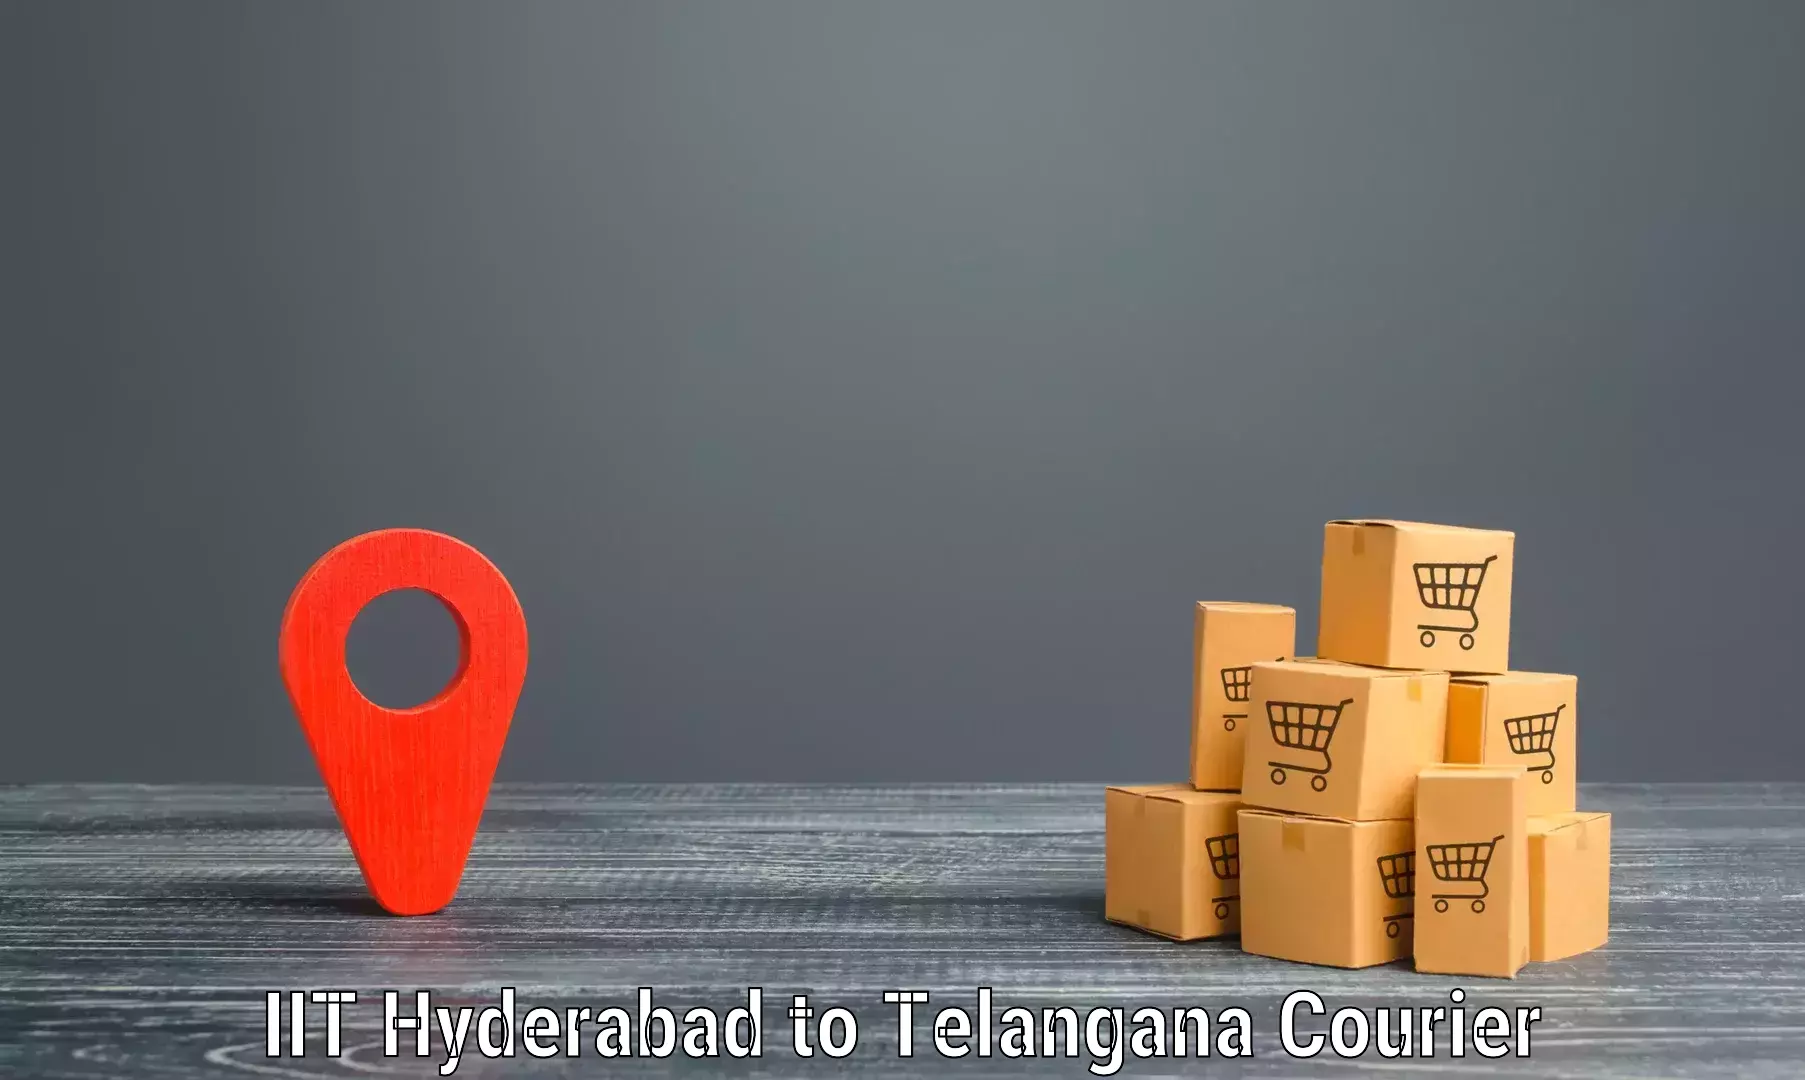 24-hour courier service IIT Hyderabad to Hyderabad